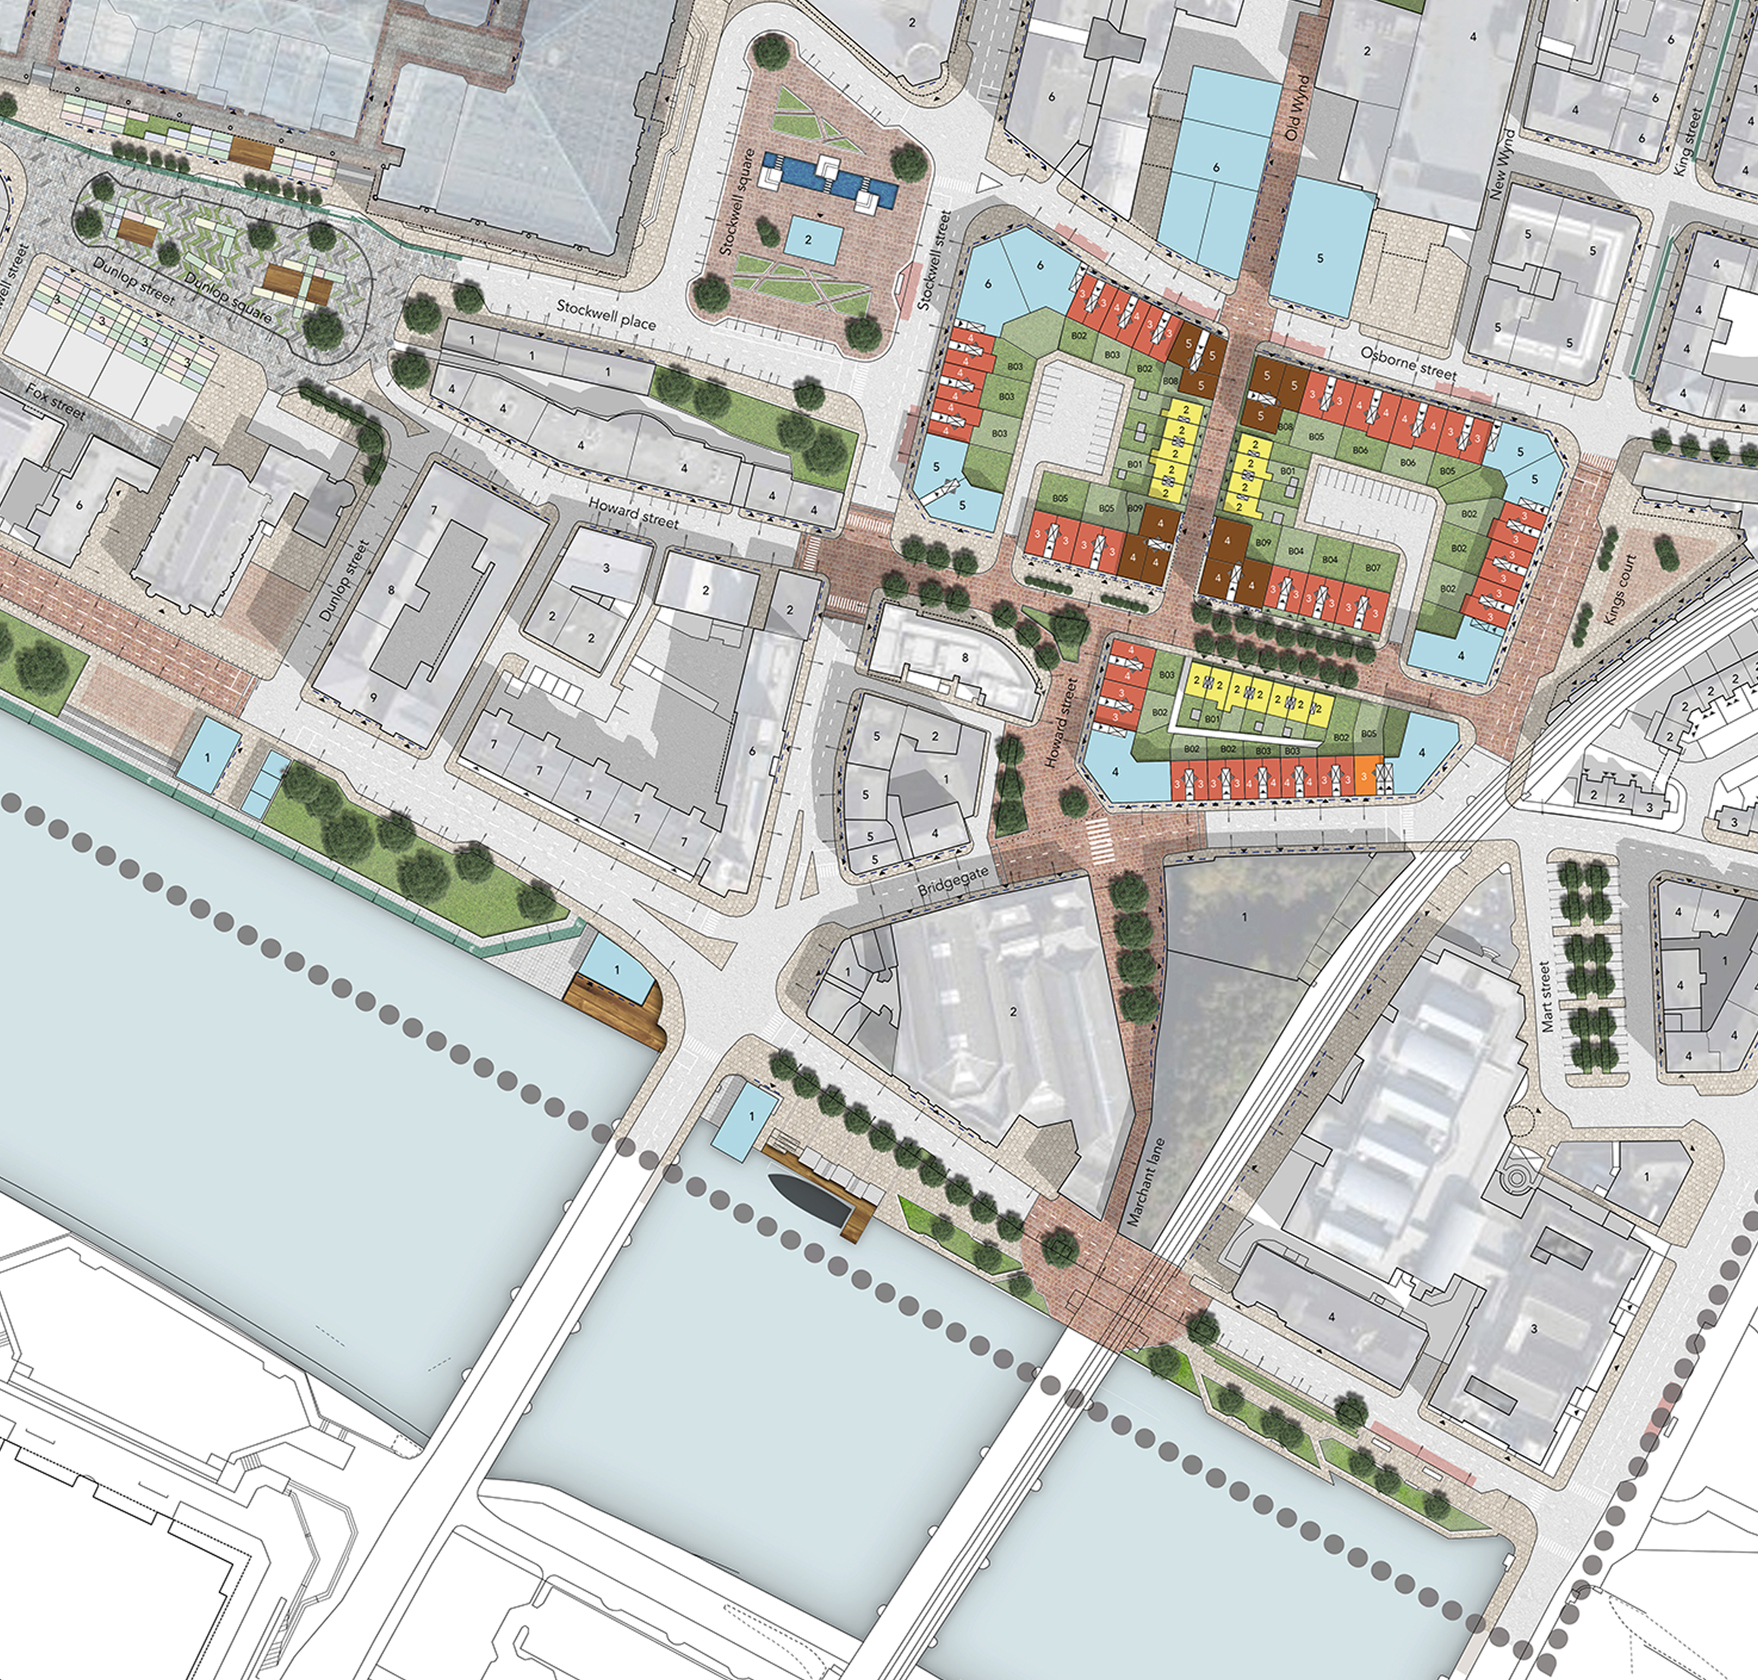 Future Glasgow: “The Saint Enoch District Vision” Masterplan